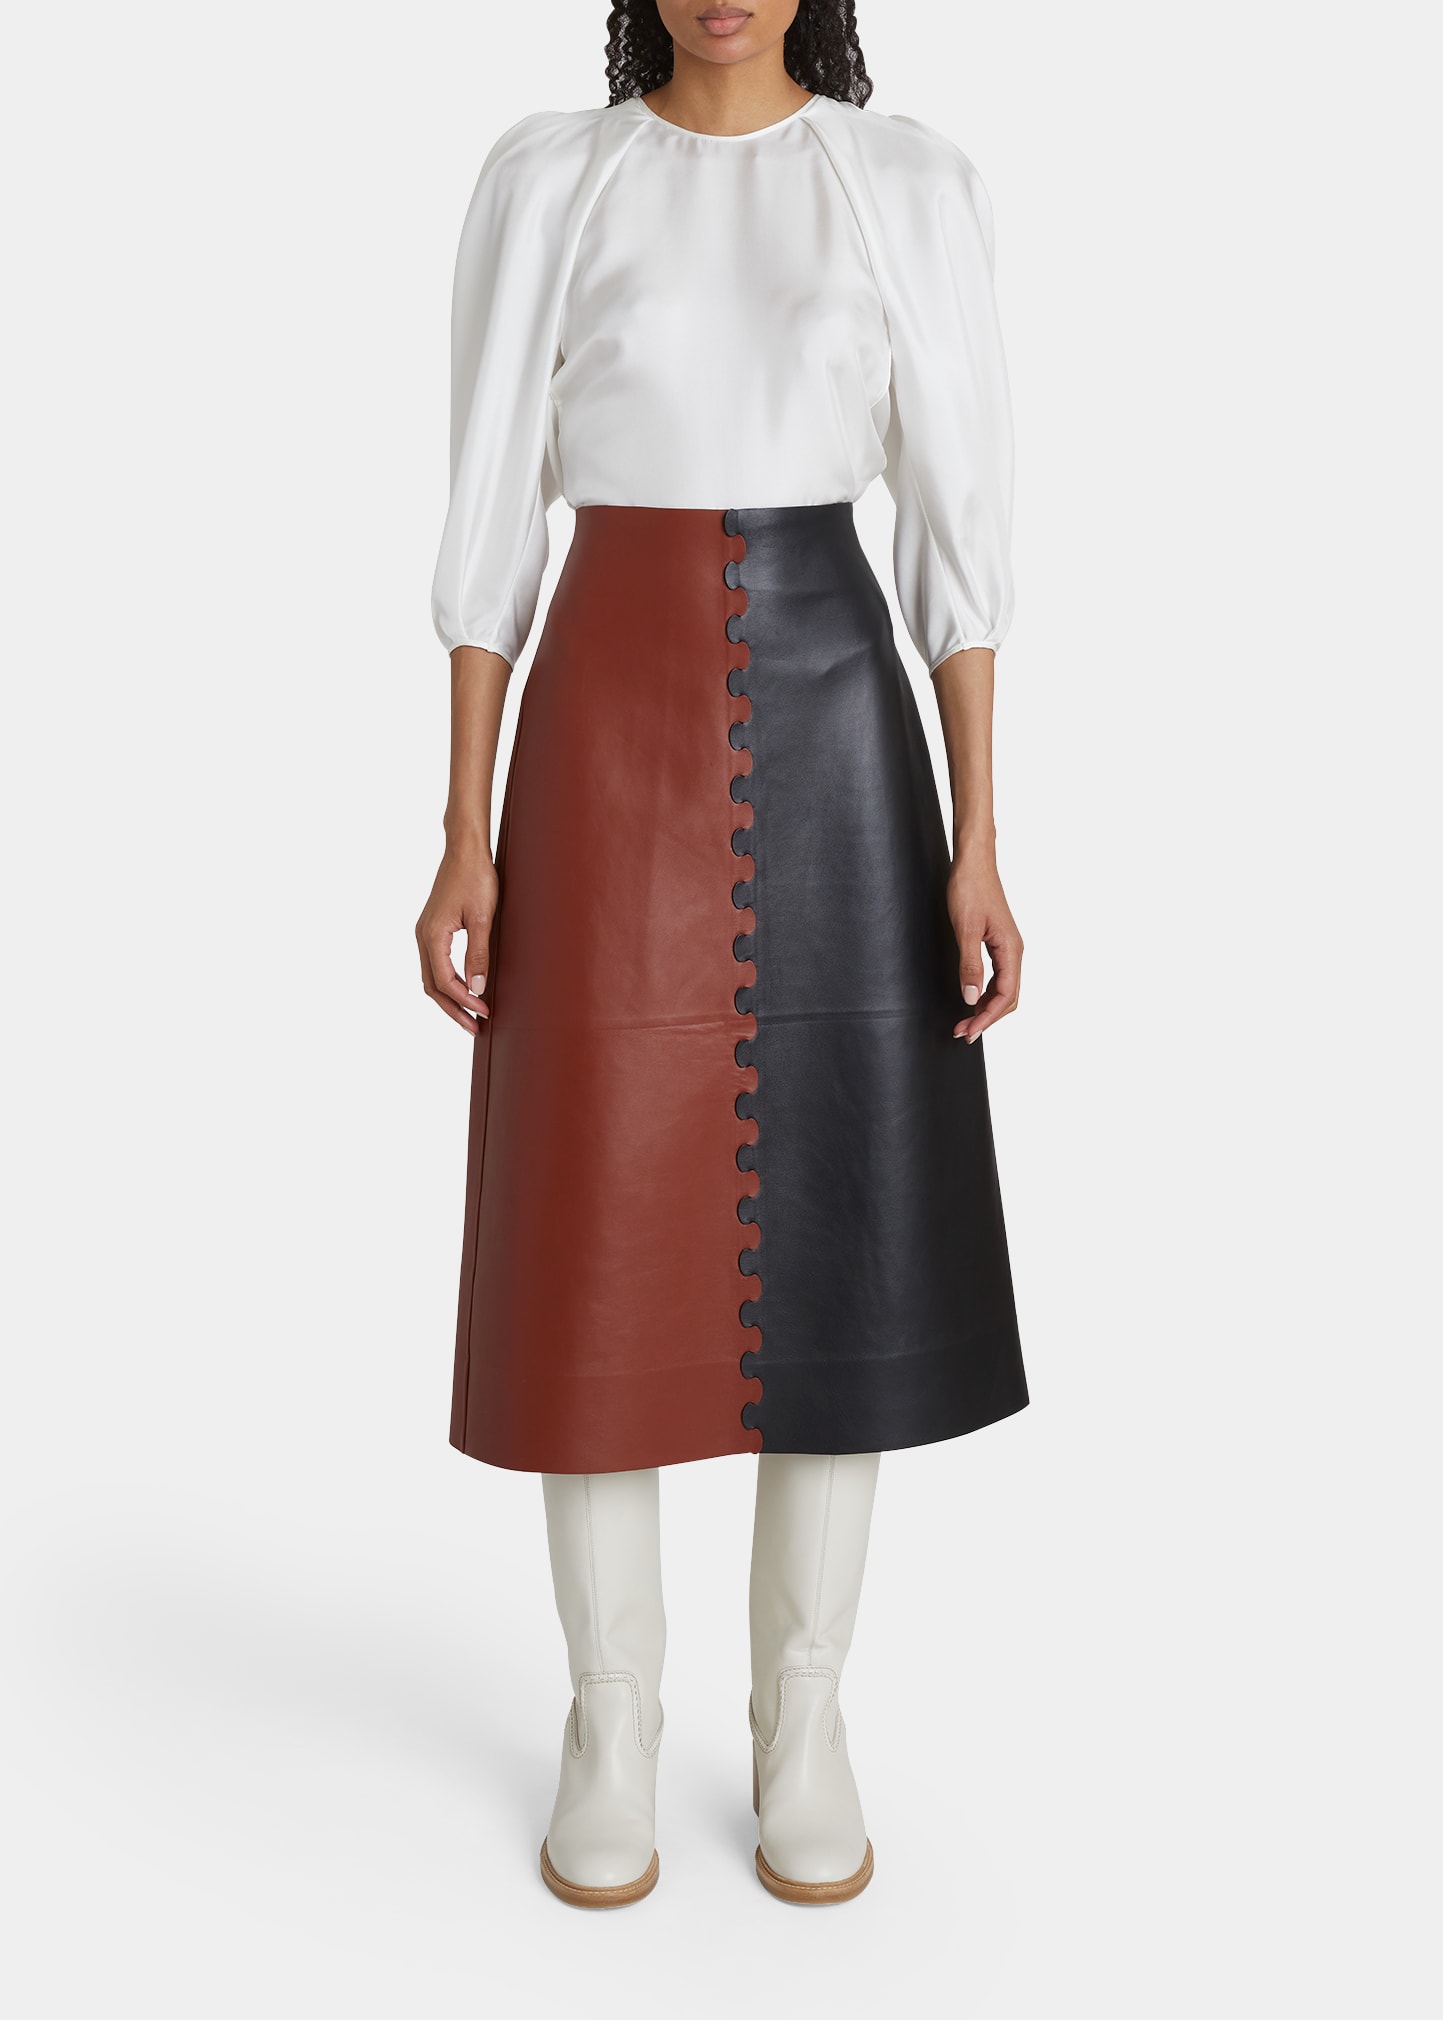 Chloé calf leather jumper skirt.